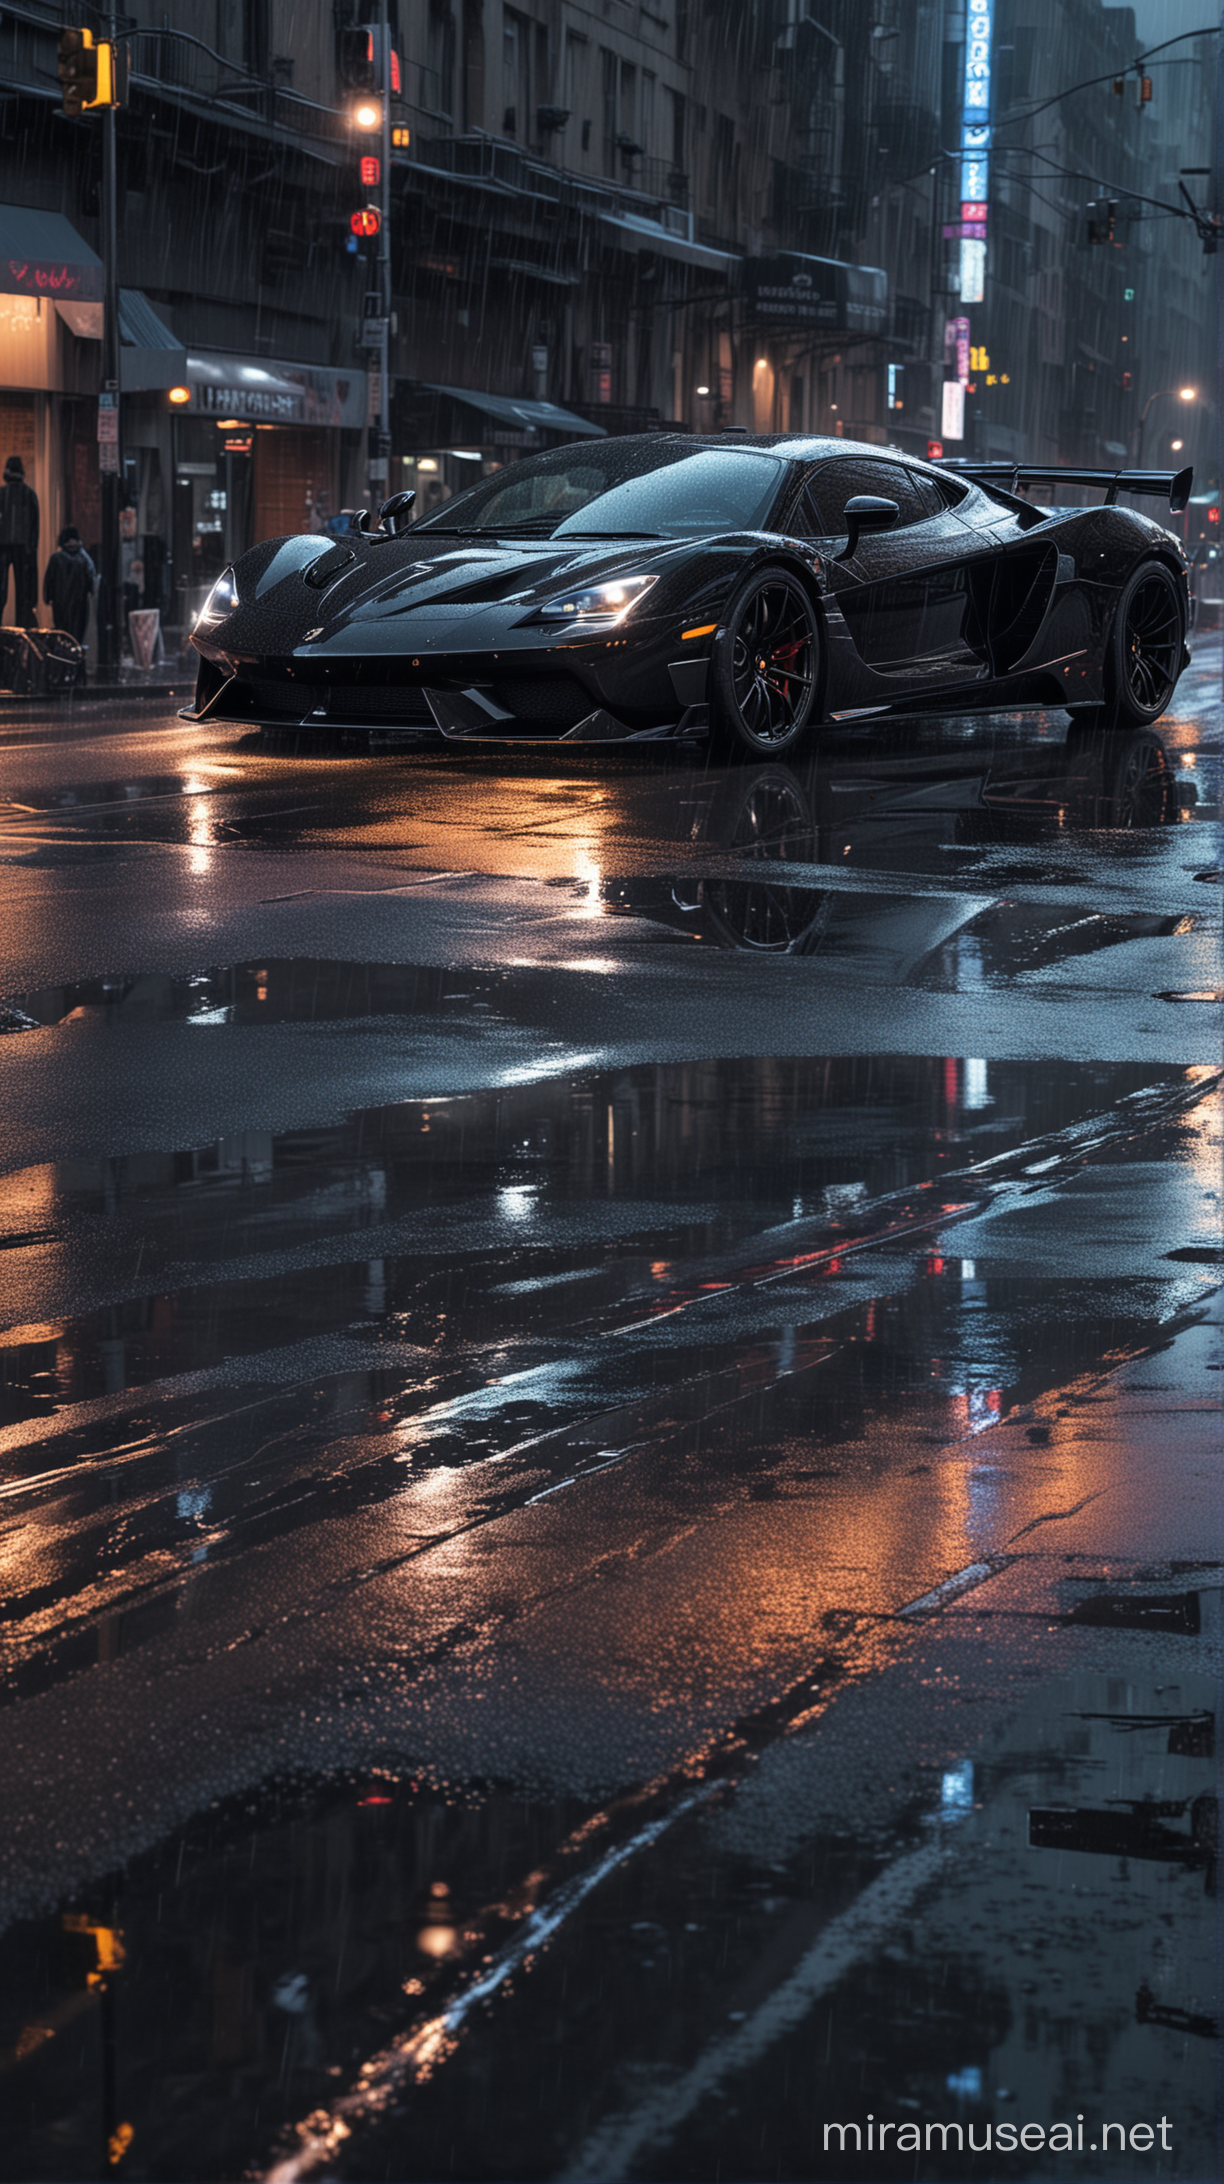 Nighttime Urban Elegance Speeding Black Supercar in Rainy Cityscape